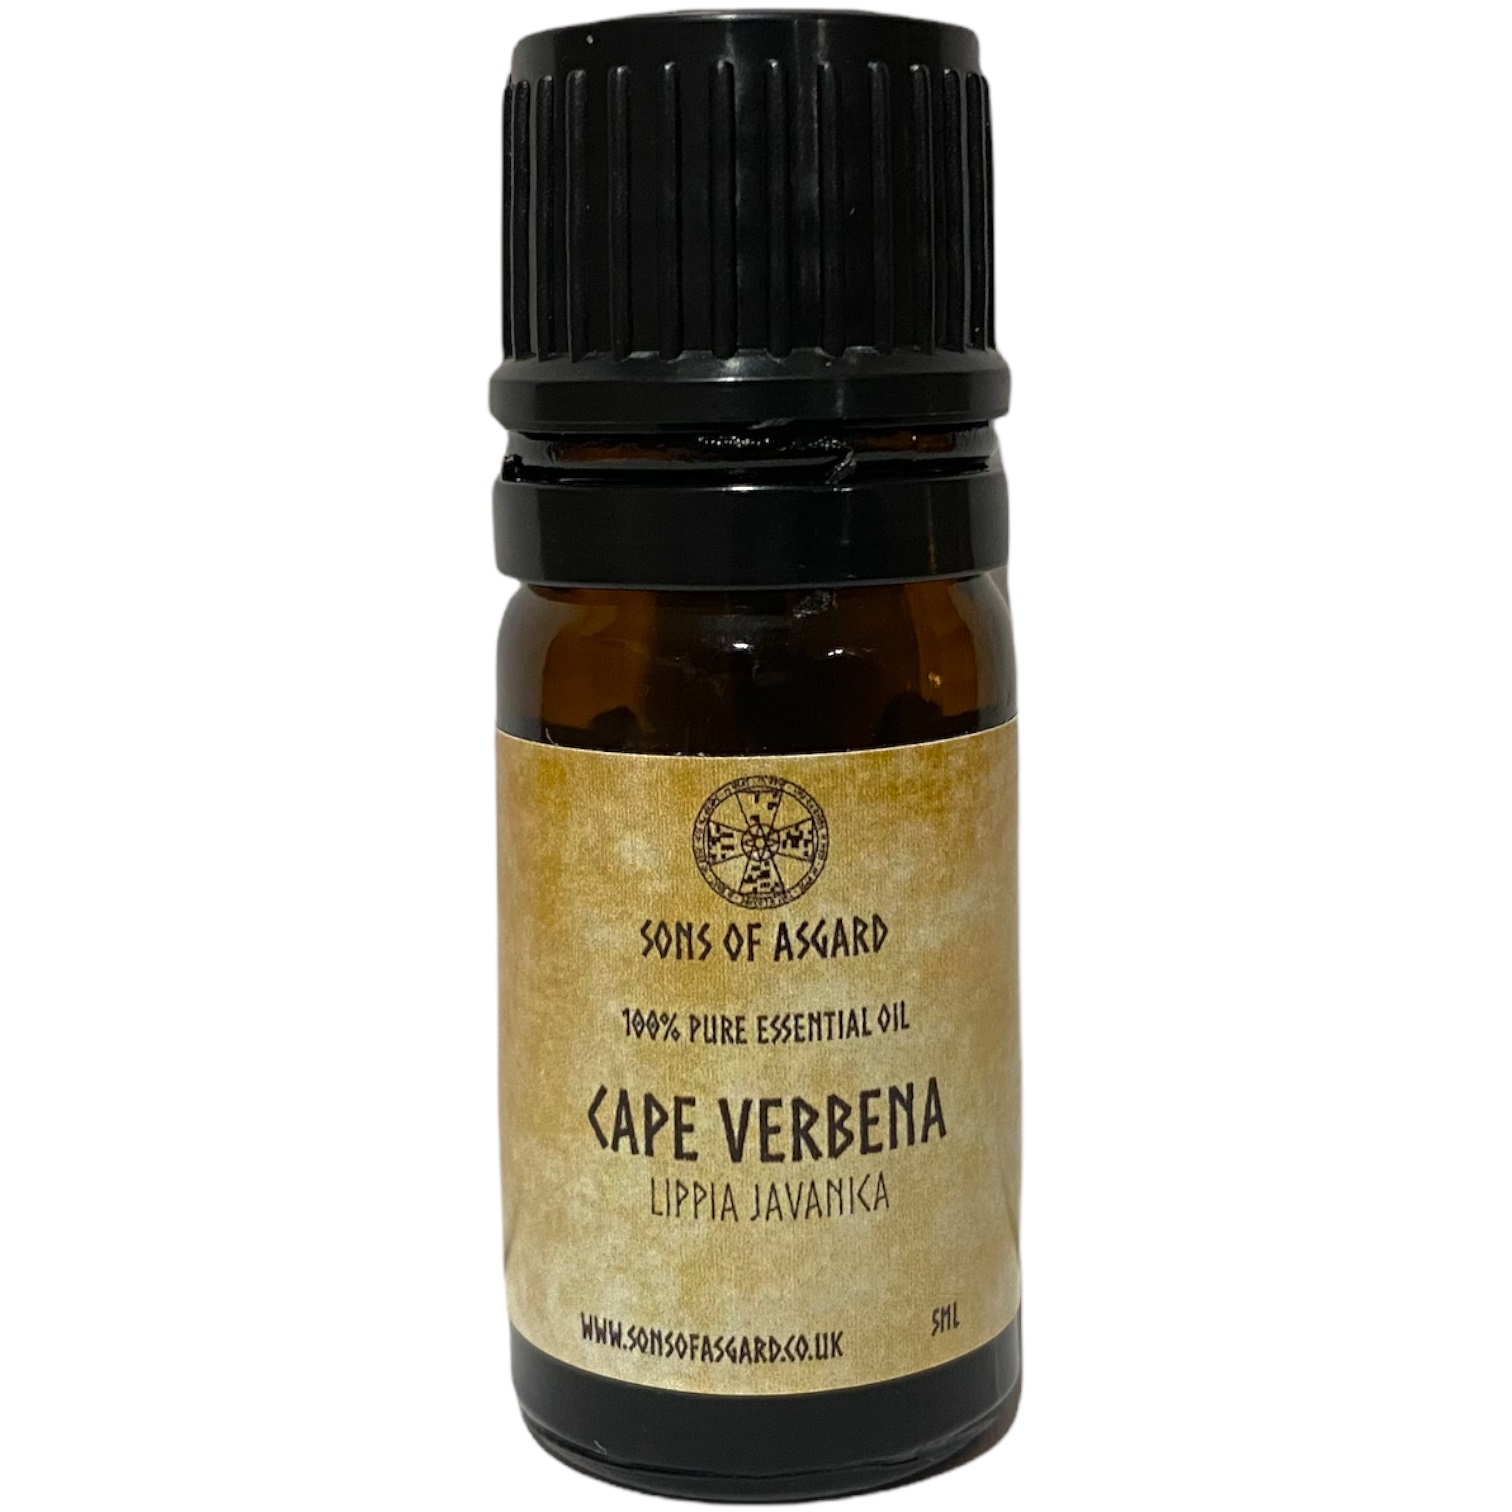 Cape Verbena - Pure Essential Oil